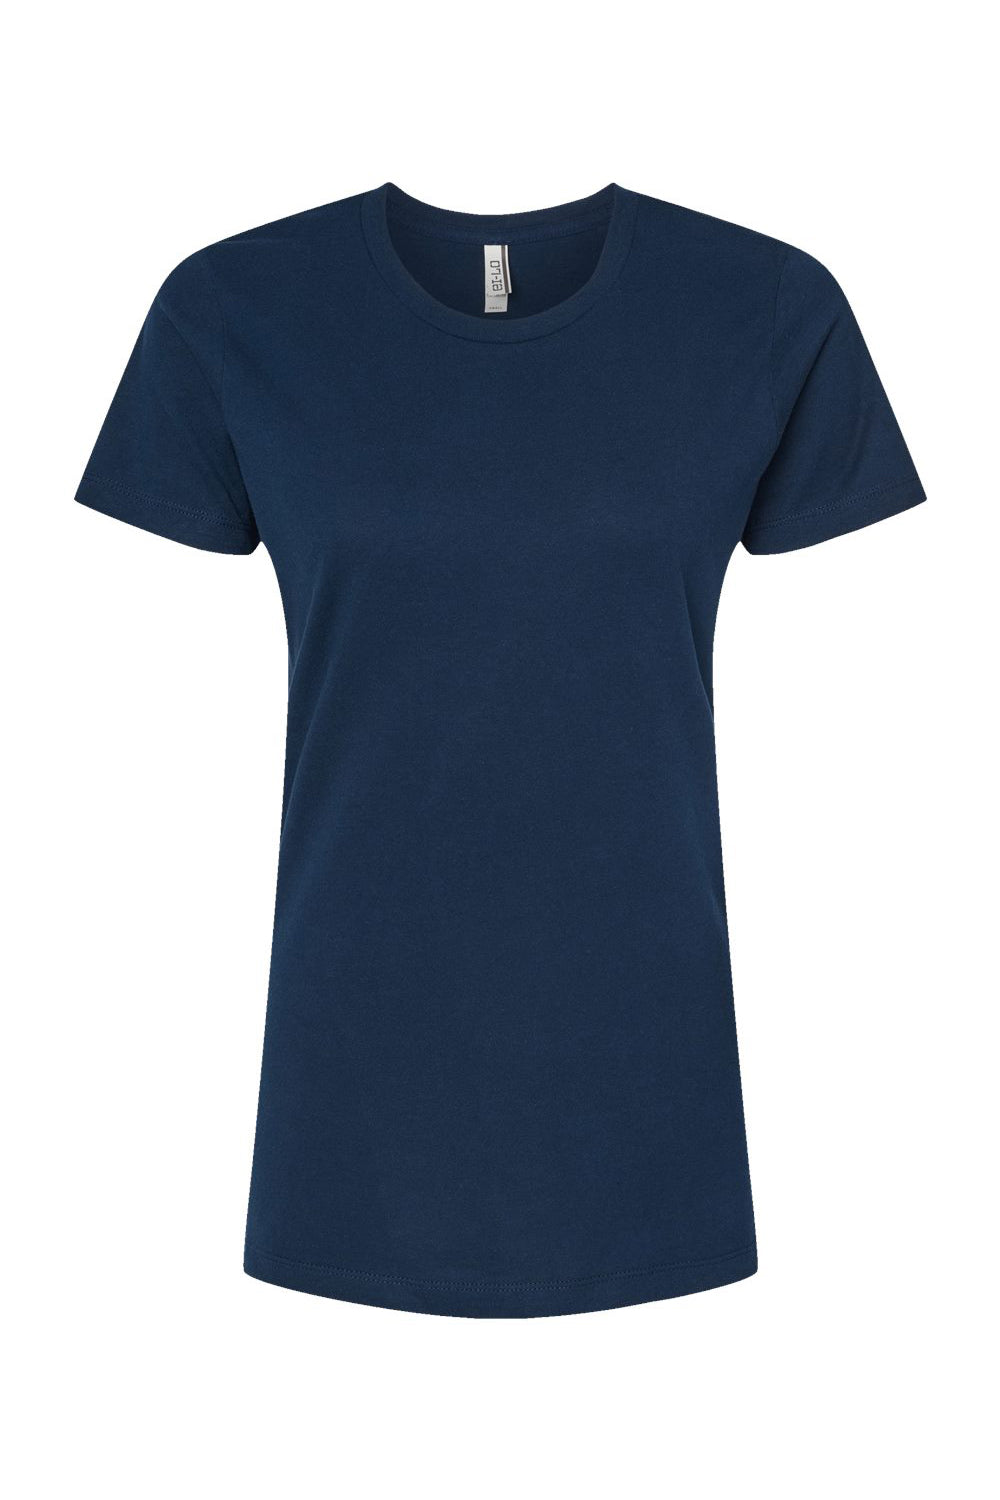 Tultex 516 Womens Premium Short Sleeve Crewneck T-Shirt Navy Blue Flat Front